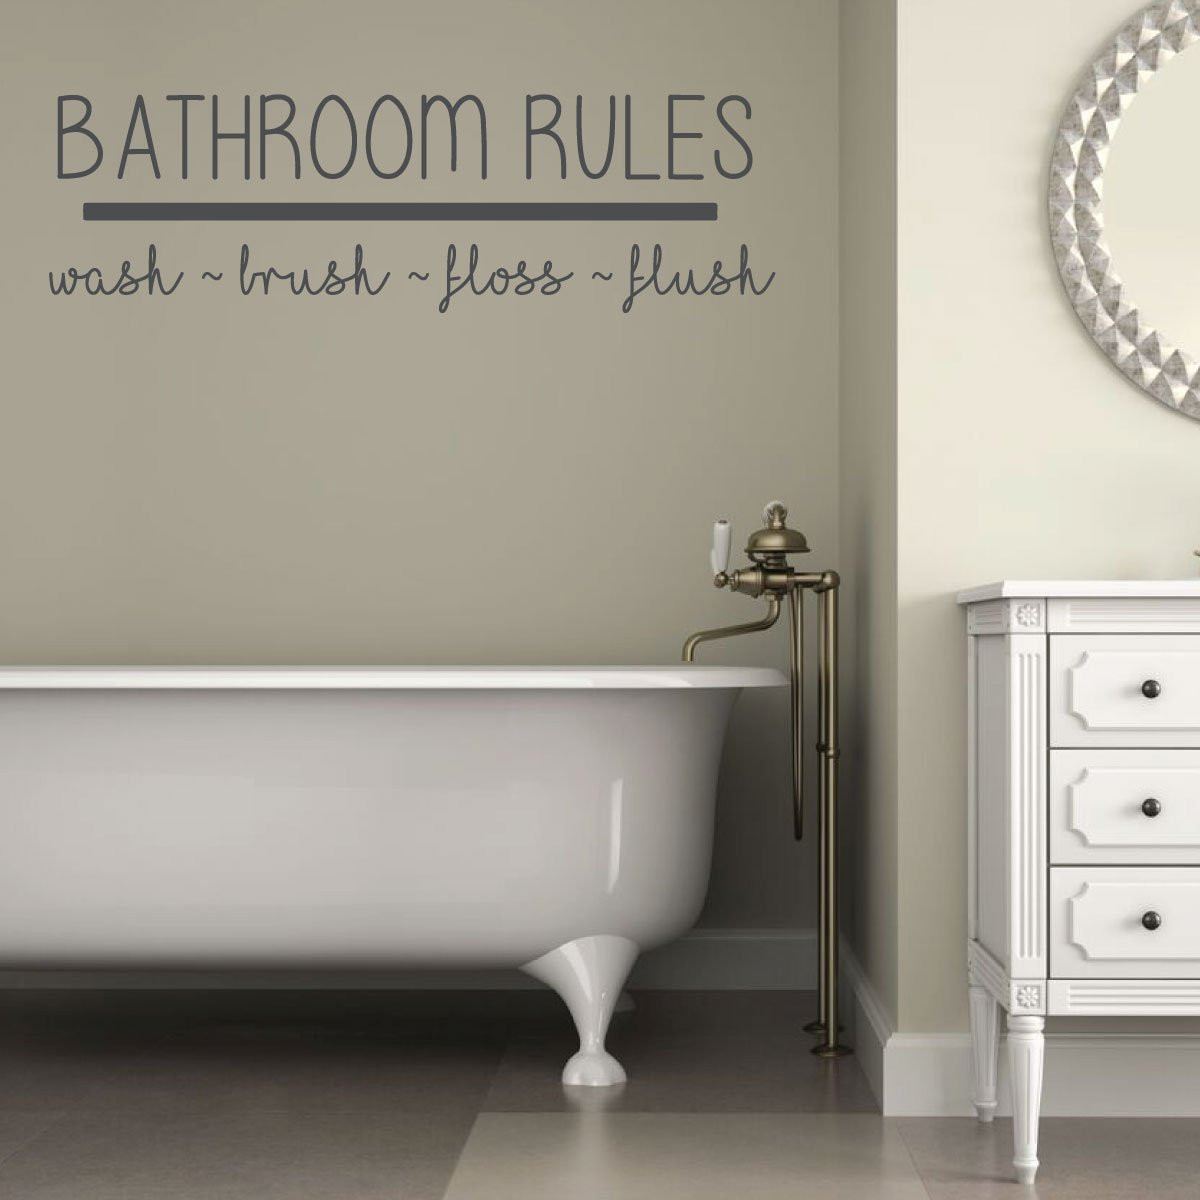 Bathroom Rules Wall Decals
 Bathroom Rules Quote Bath Vinyl Decor Wall Decal